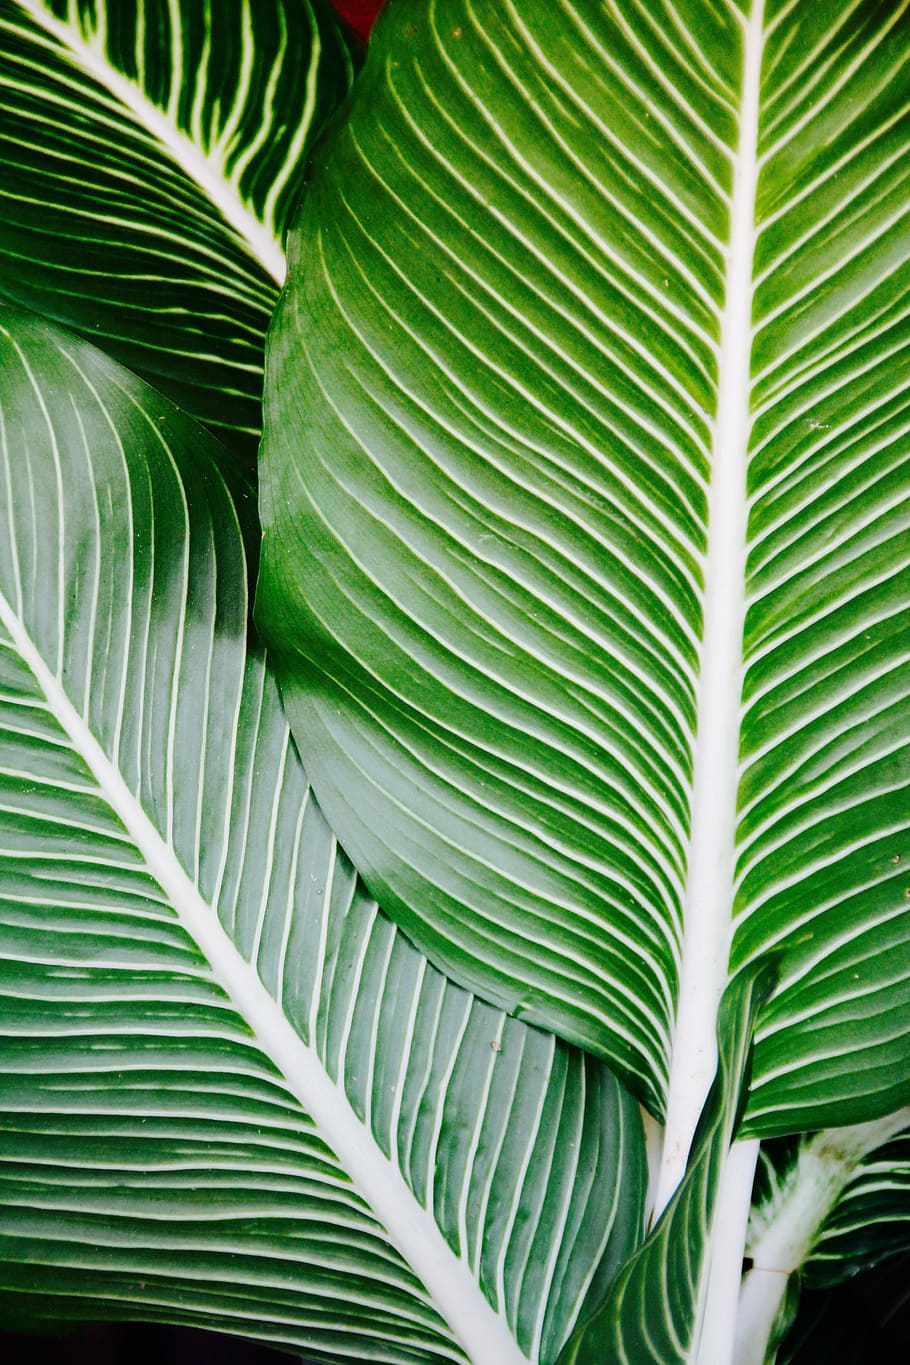 green leafy vegetable, palm, frond, leaf, exotic, palm tree, palm fronds, tropical, palm leaf, green color